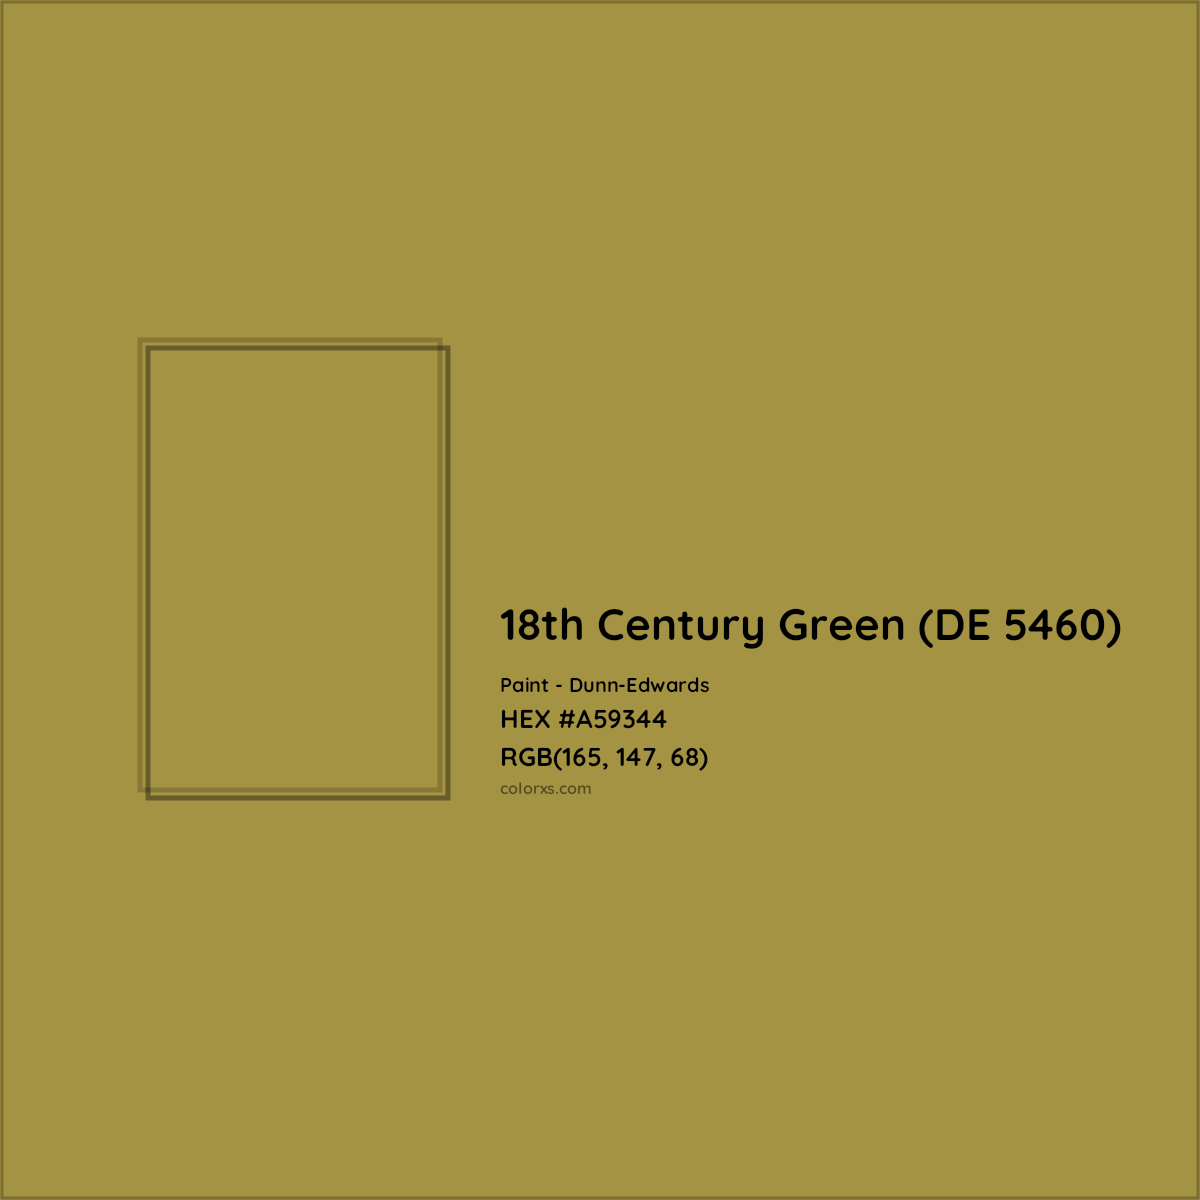 HEX #A59344 18th Century Green (DE 5460) Paint Dunn-Edwards - Color Code